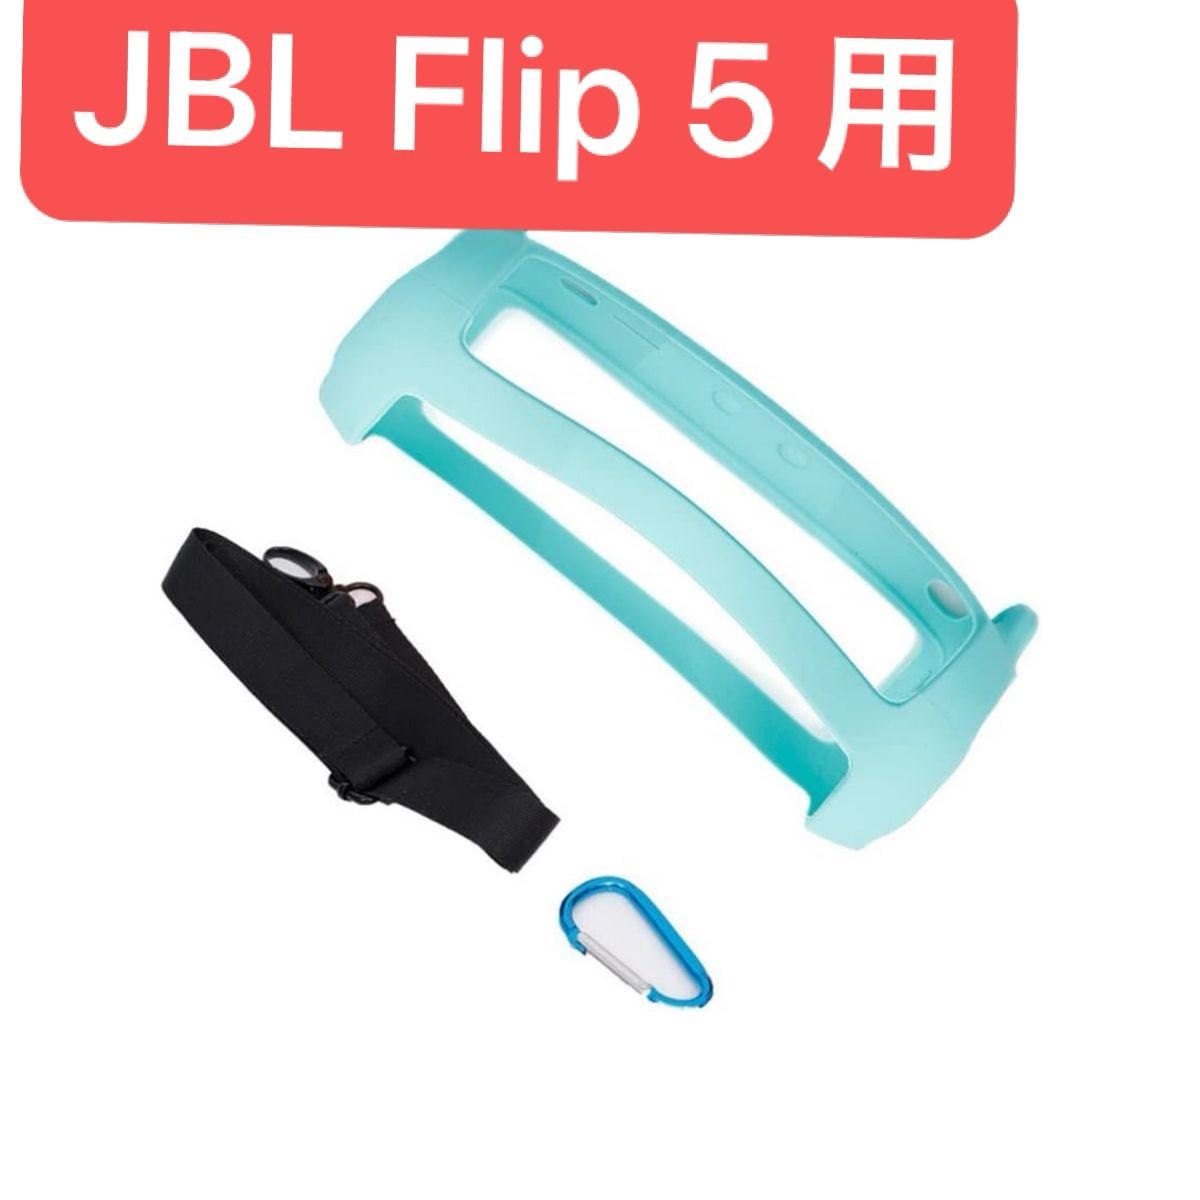 for JBL Flip 5 ケースシリコンケース Bluetoothスピーカー専用ケース シリコンカバー トラベルケース N